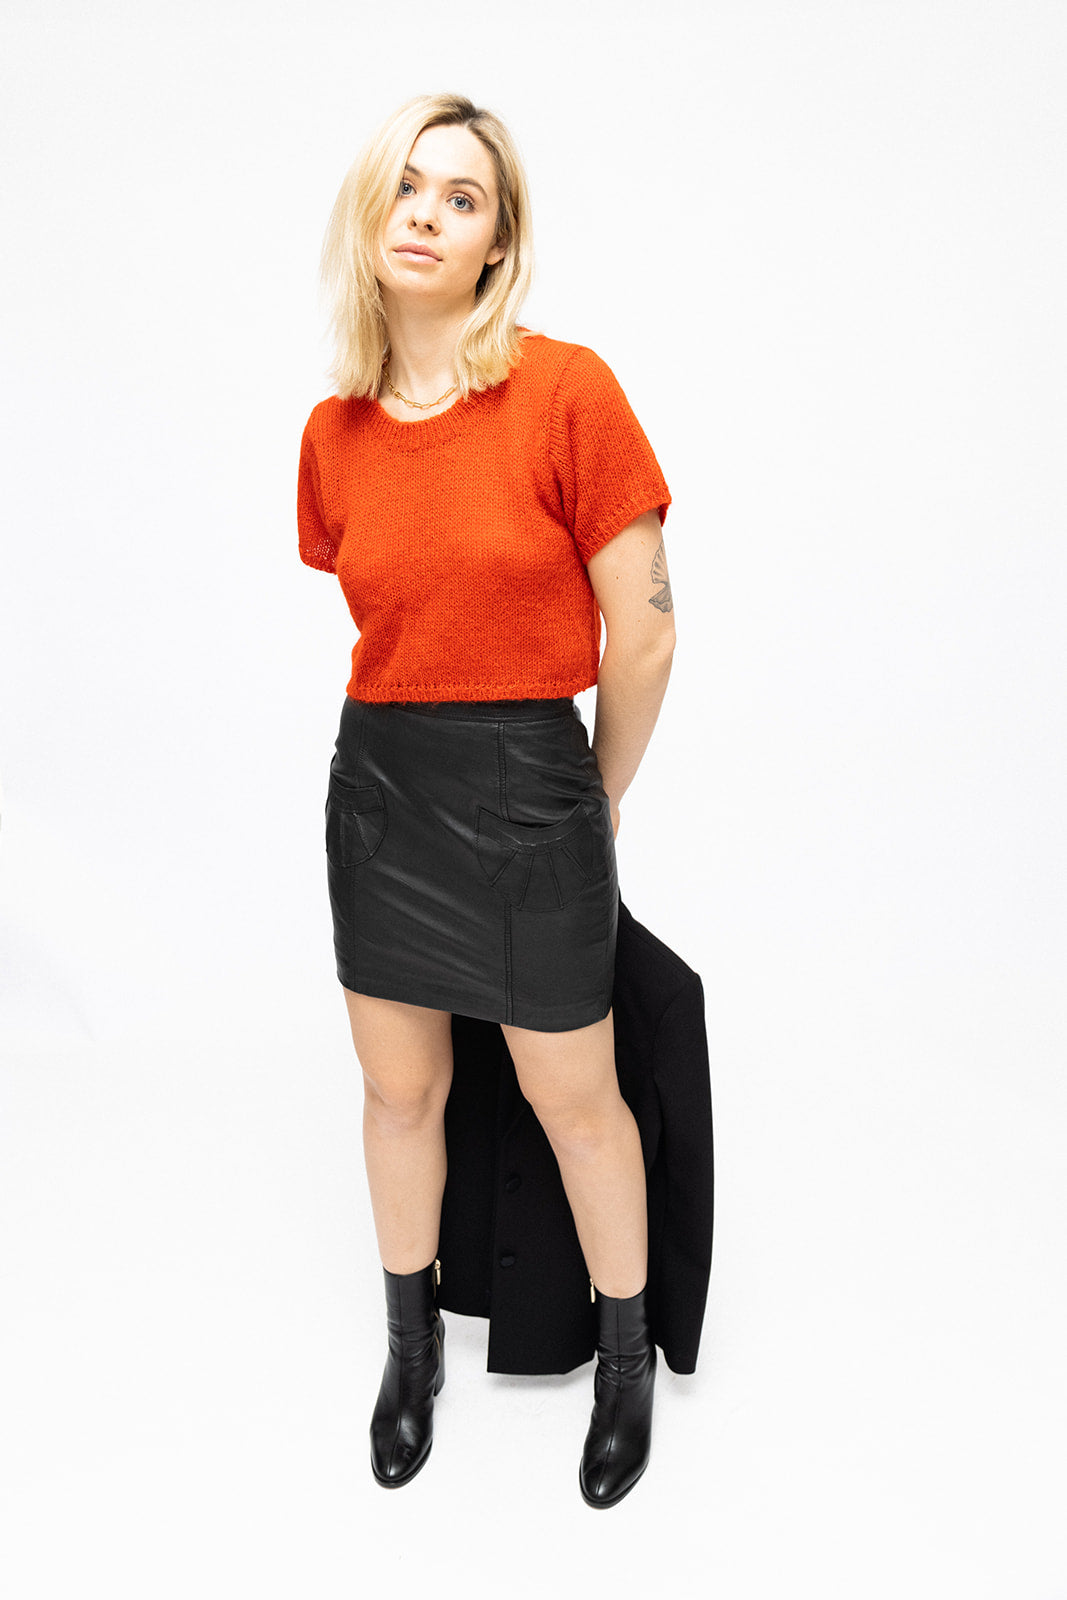 Arabella Ramsay Mini Leather Skirt